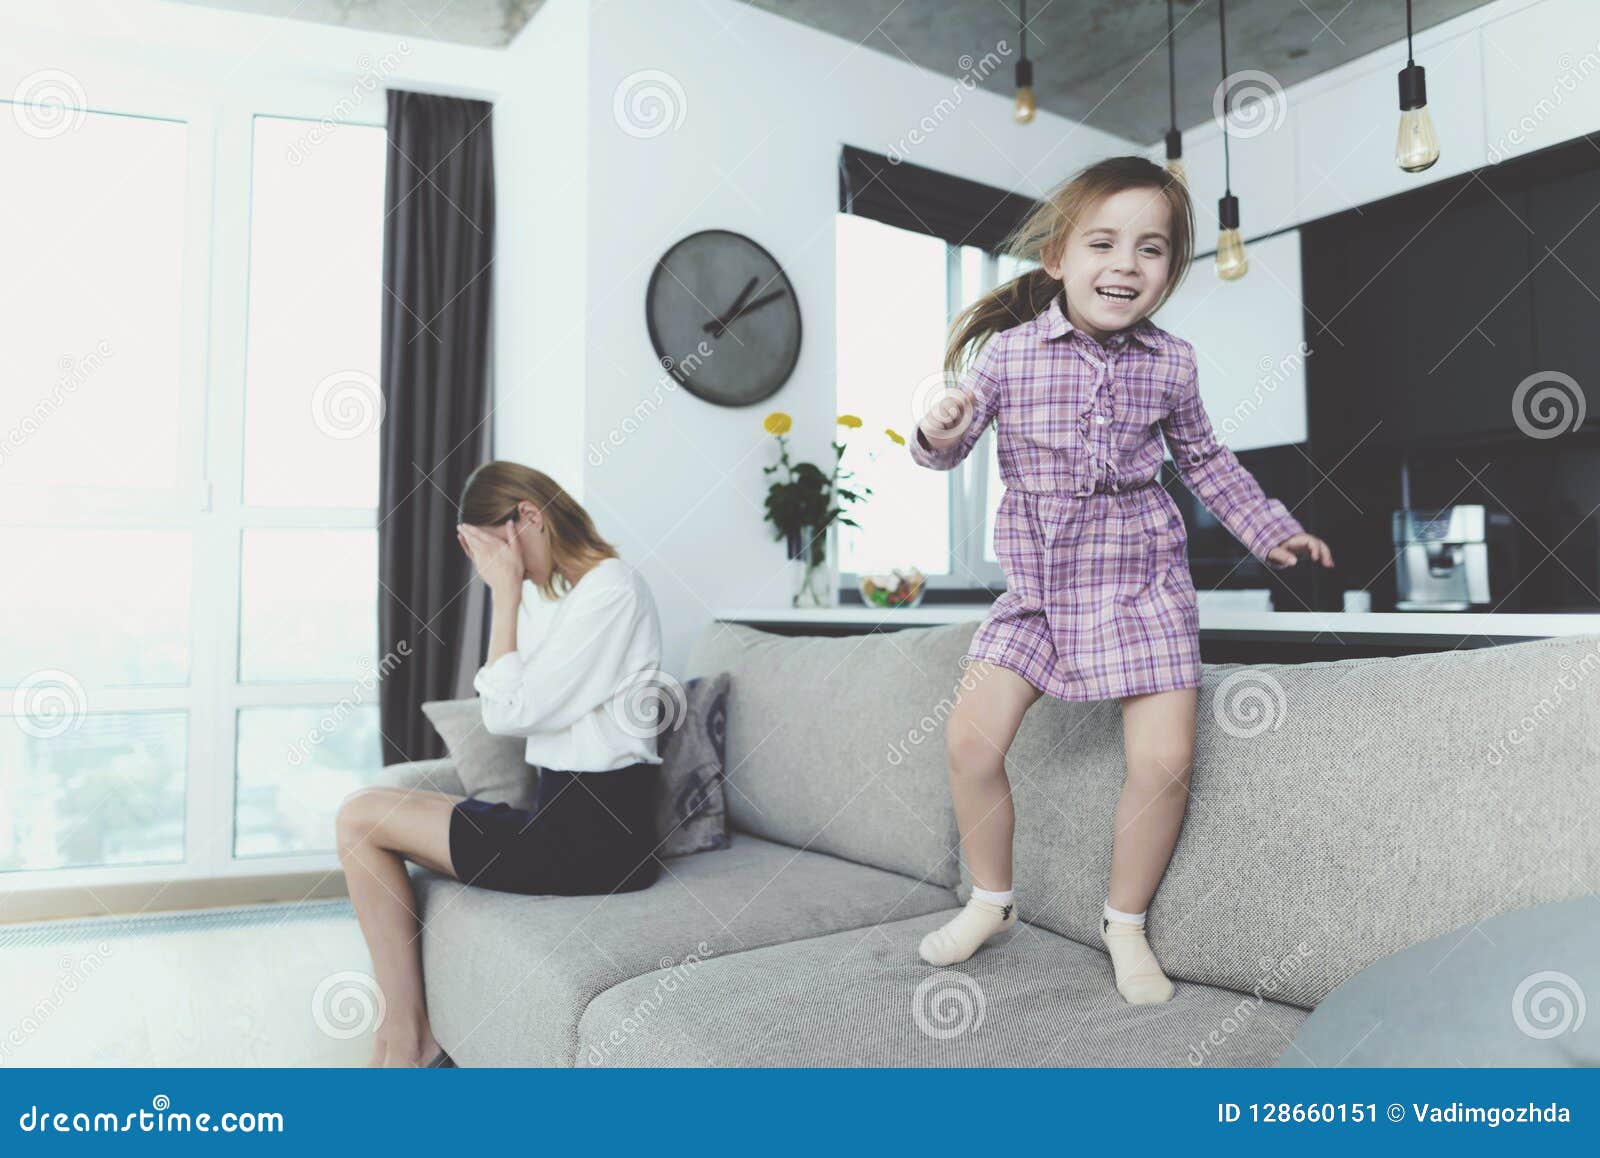 Girl Having Fun Jumping on Sofa when Mother Upset Stock Image - Image ...